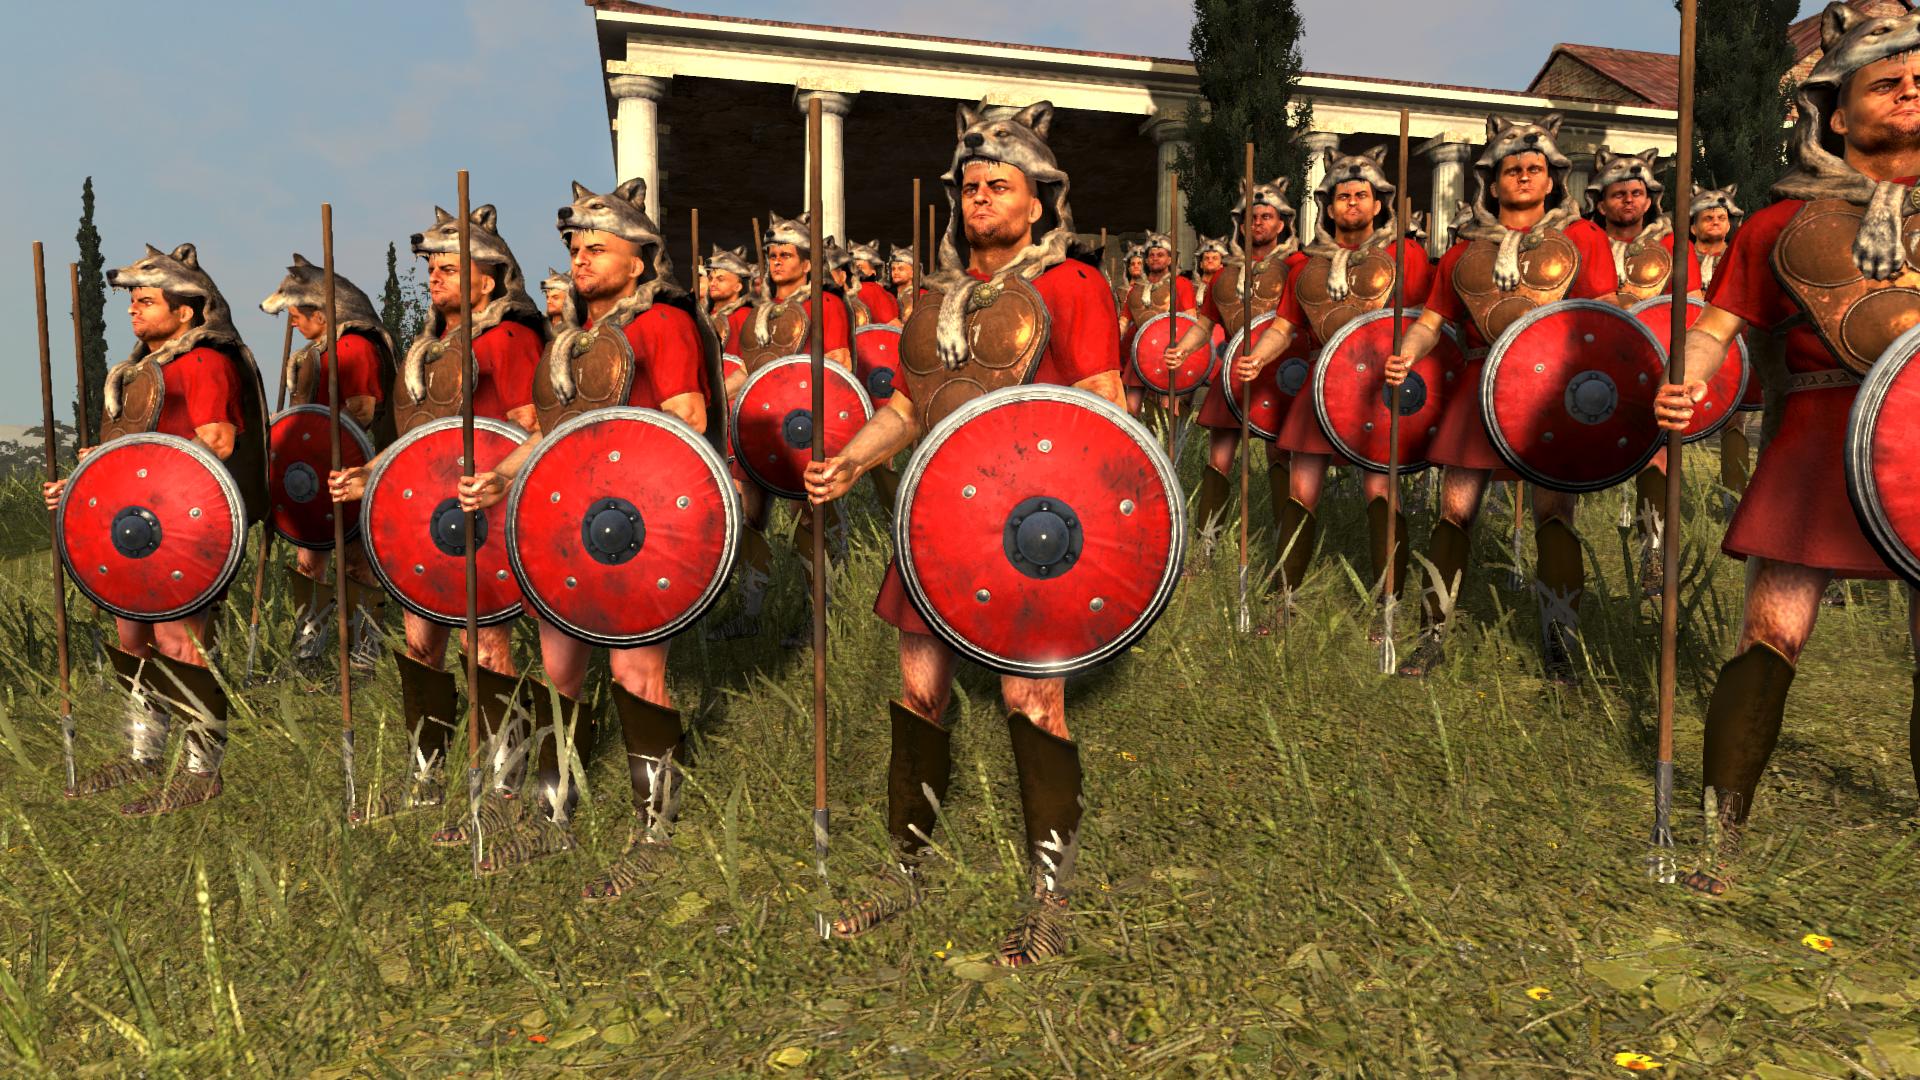 Total War: Arena — гайд по фракции «Рим»